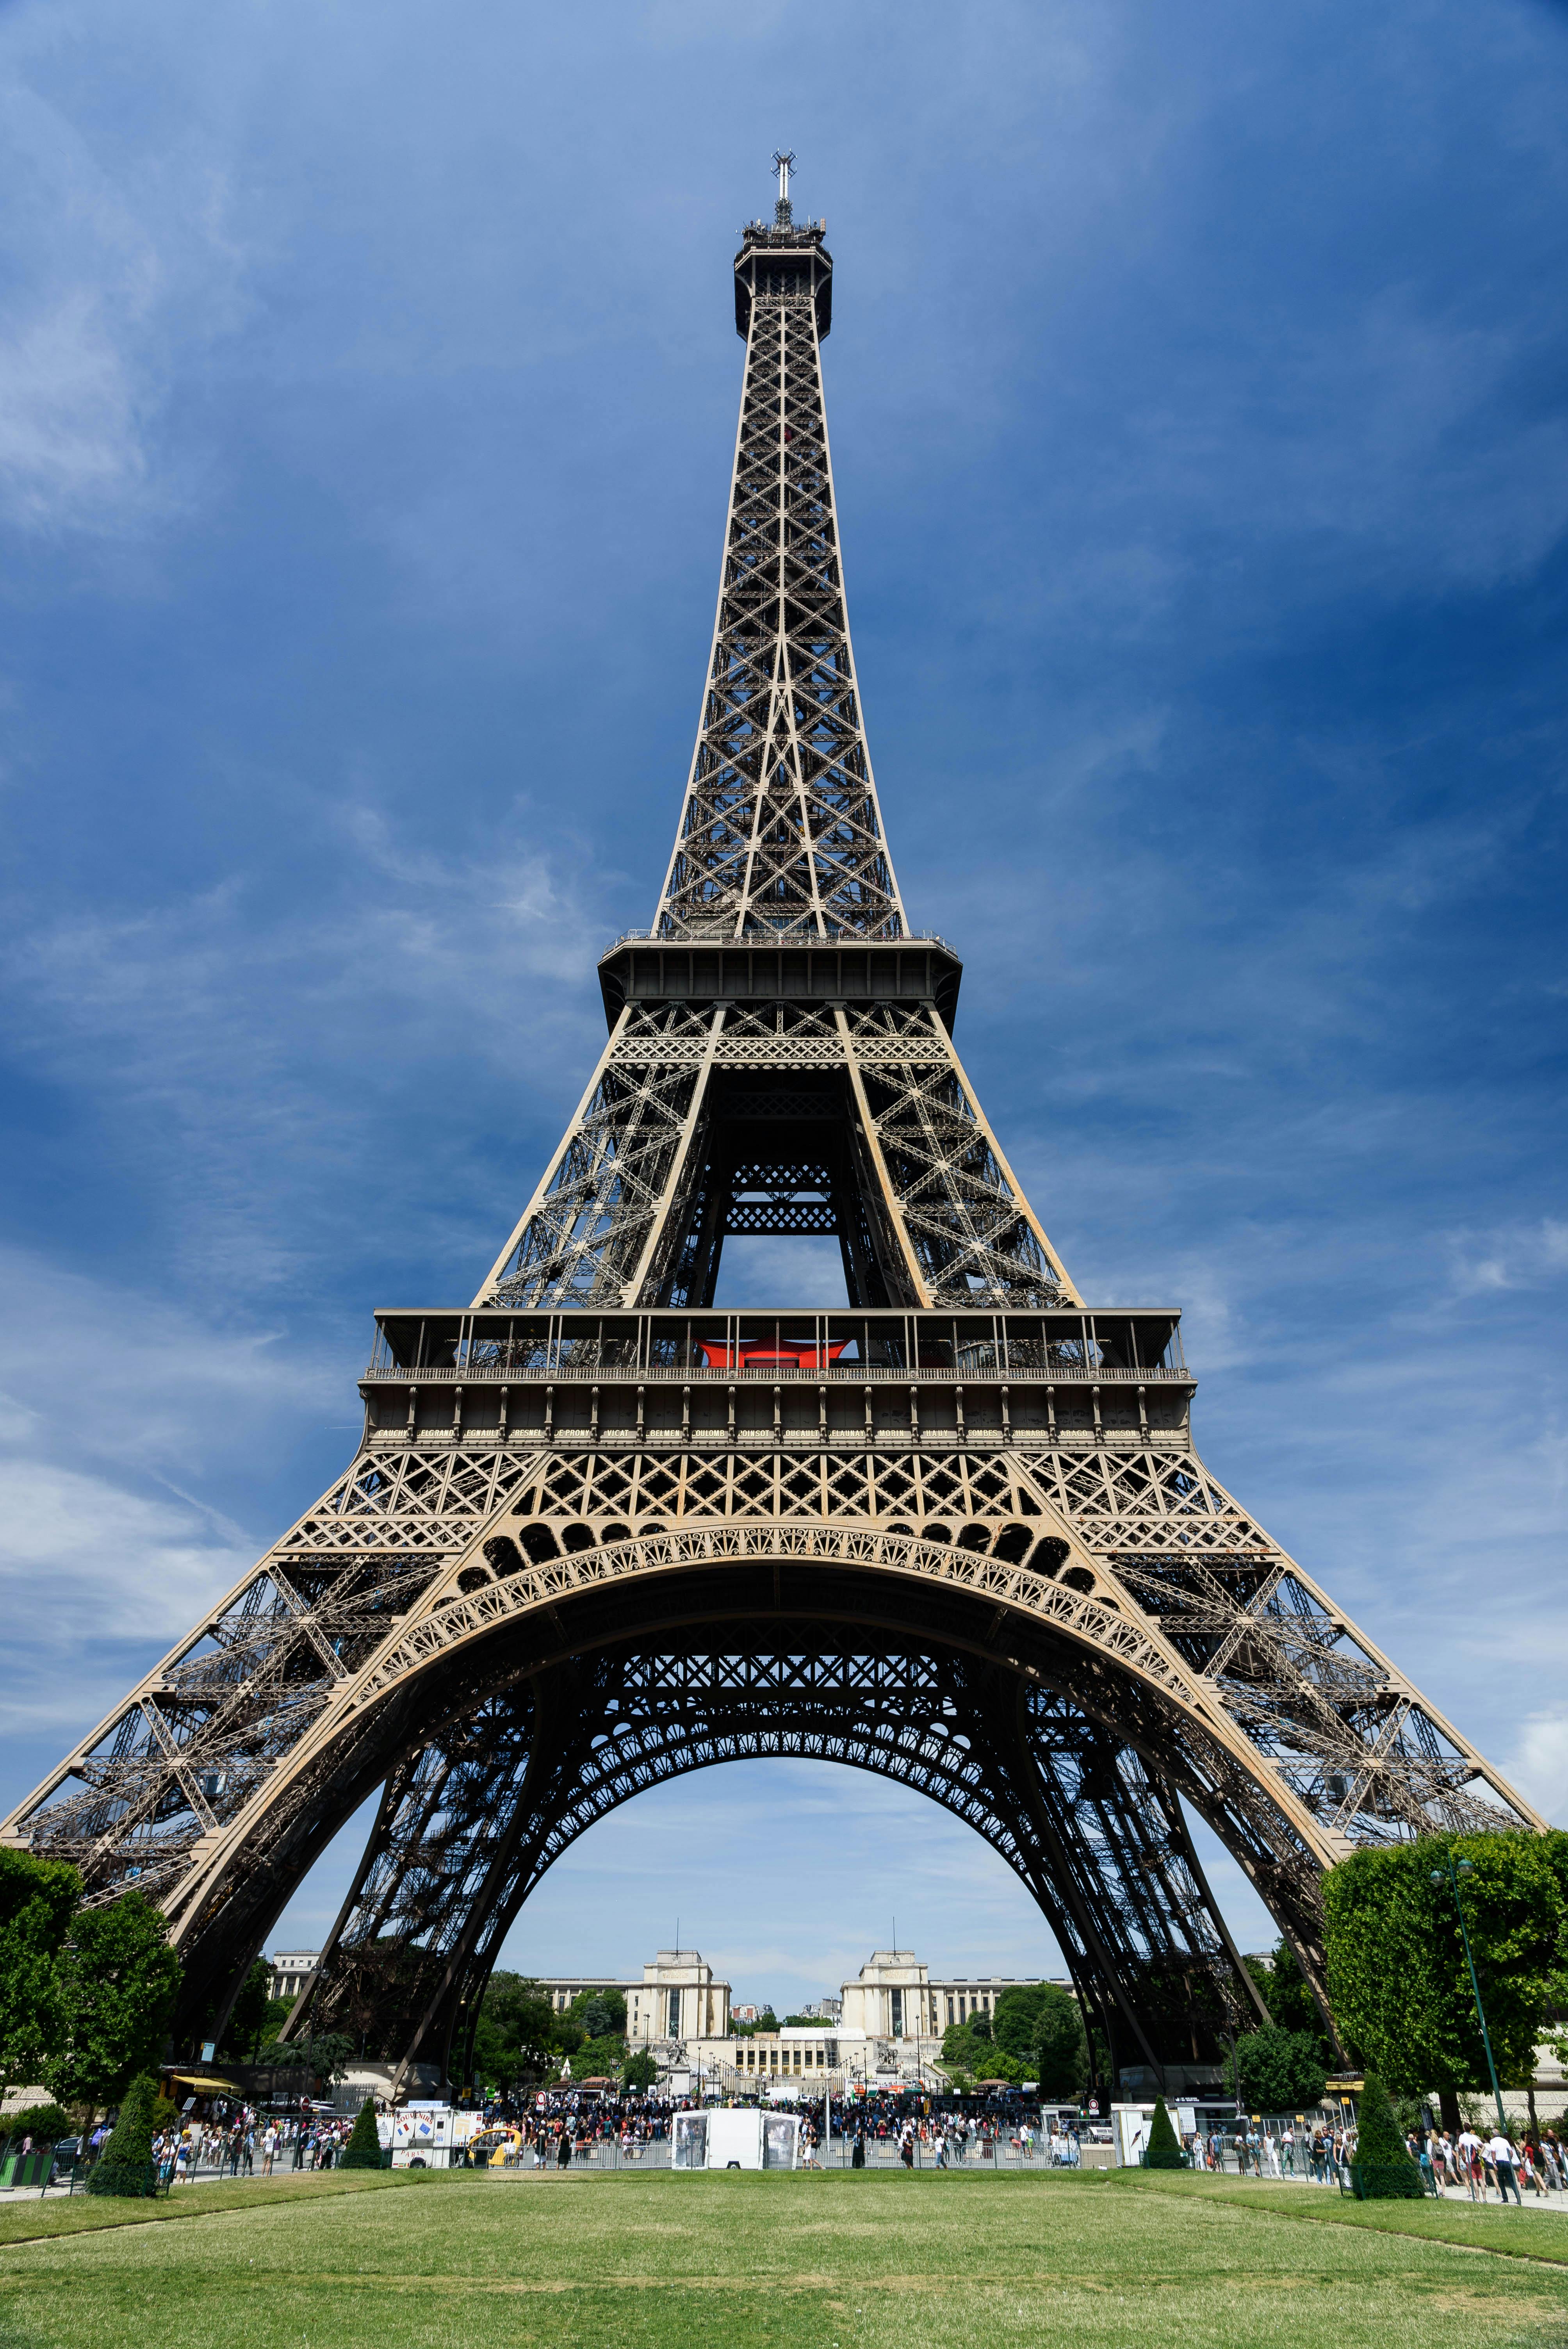 1000+ Beautiful Eiffel Tower Photos · Pexels · Free Stock Photos